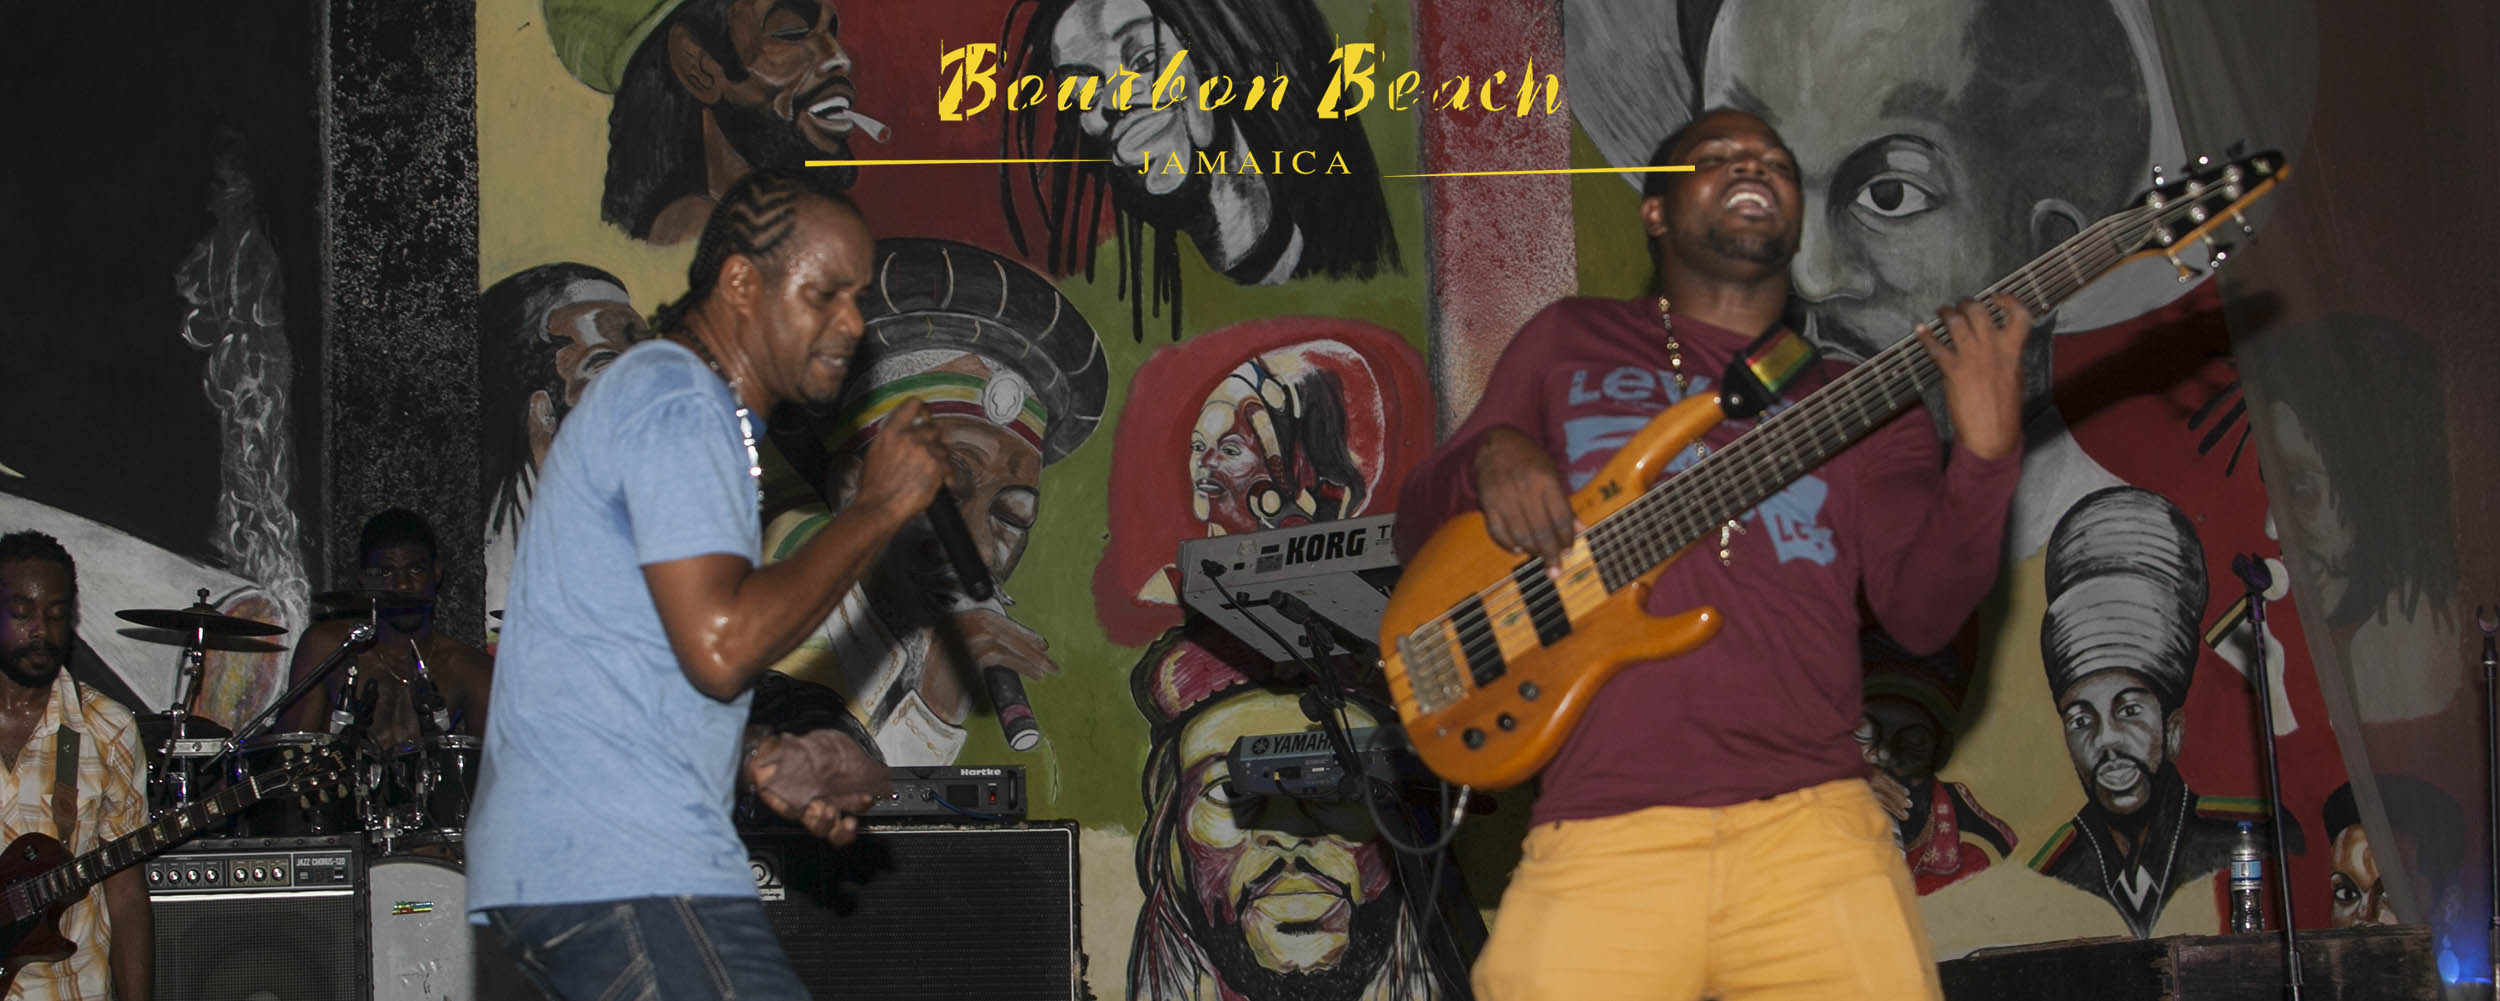 Bourbon Beach - Negril Jamaica